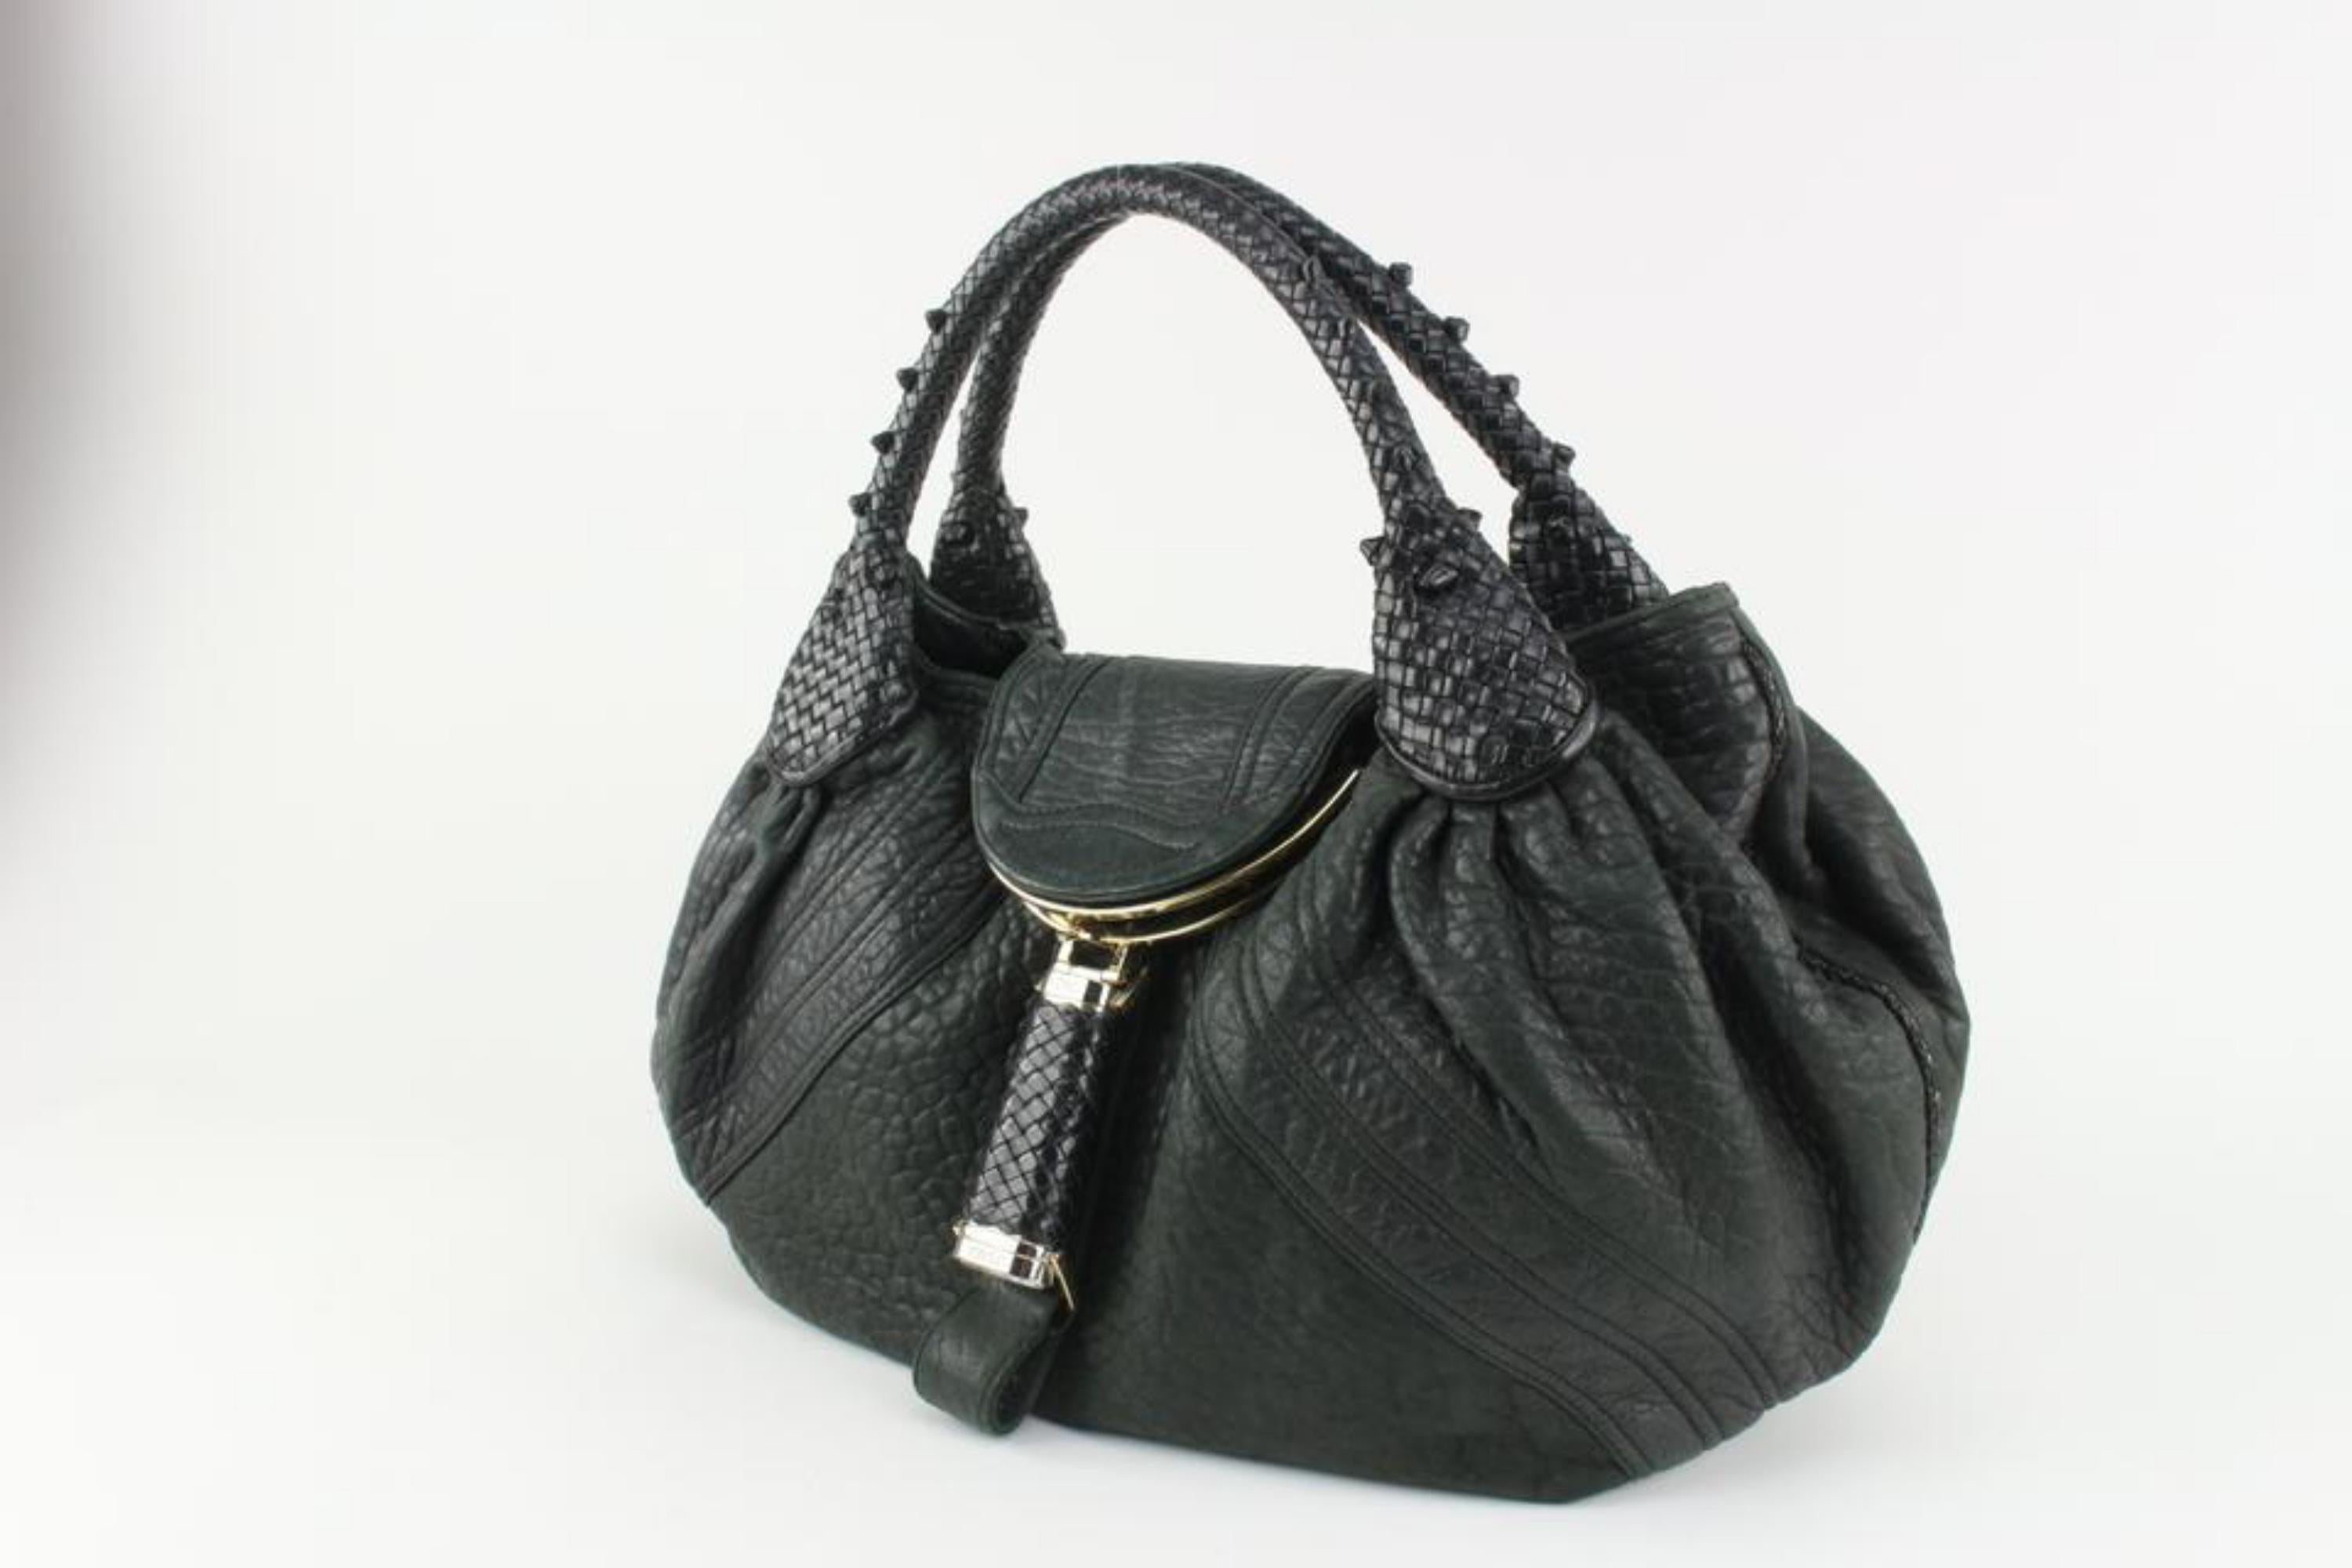 Fendi Black Leather Spy Bag Hobo 1130f21 7